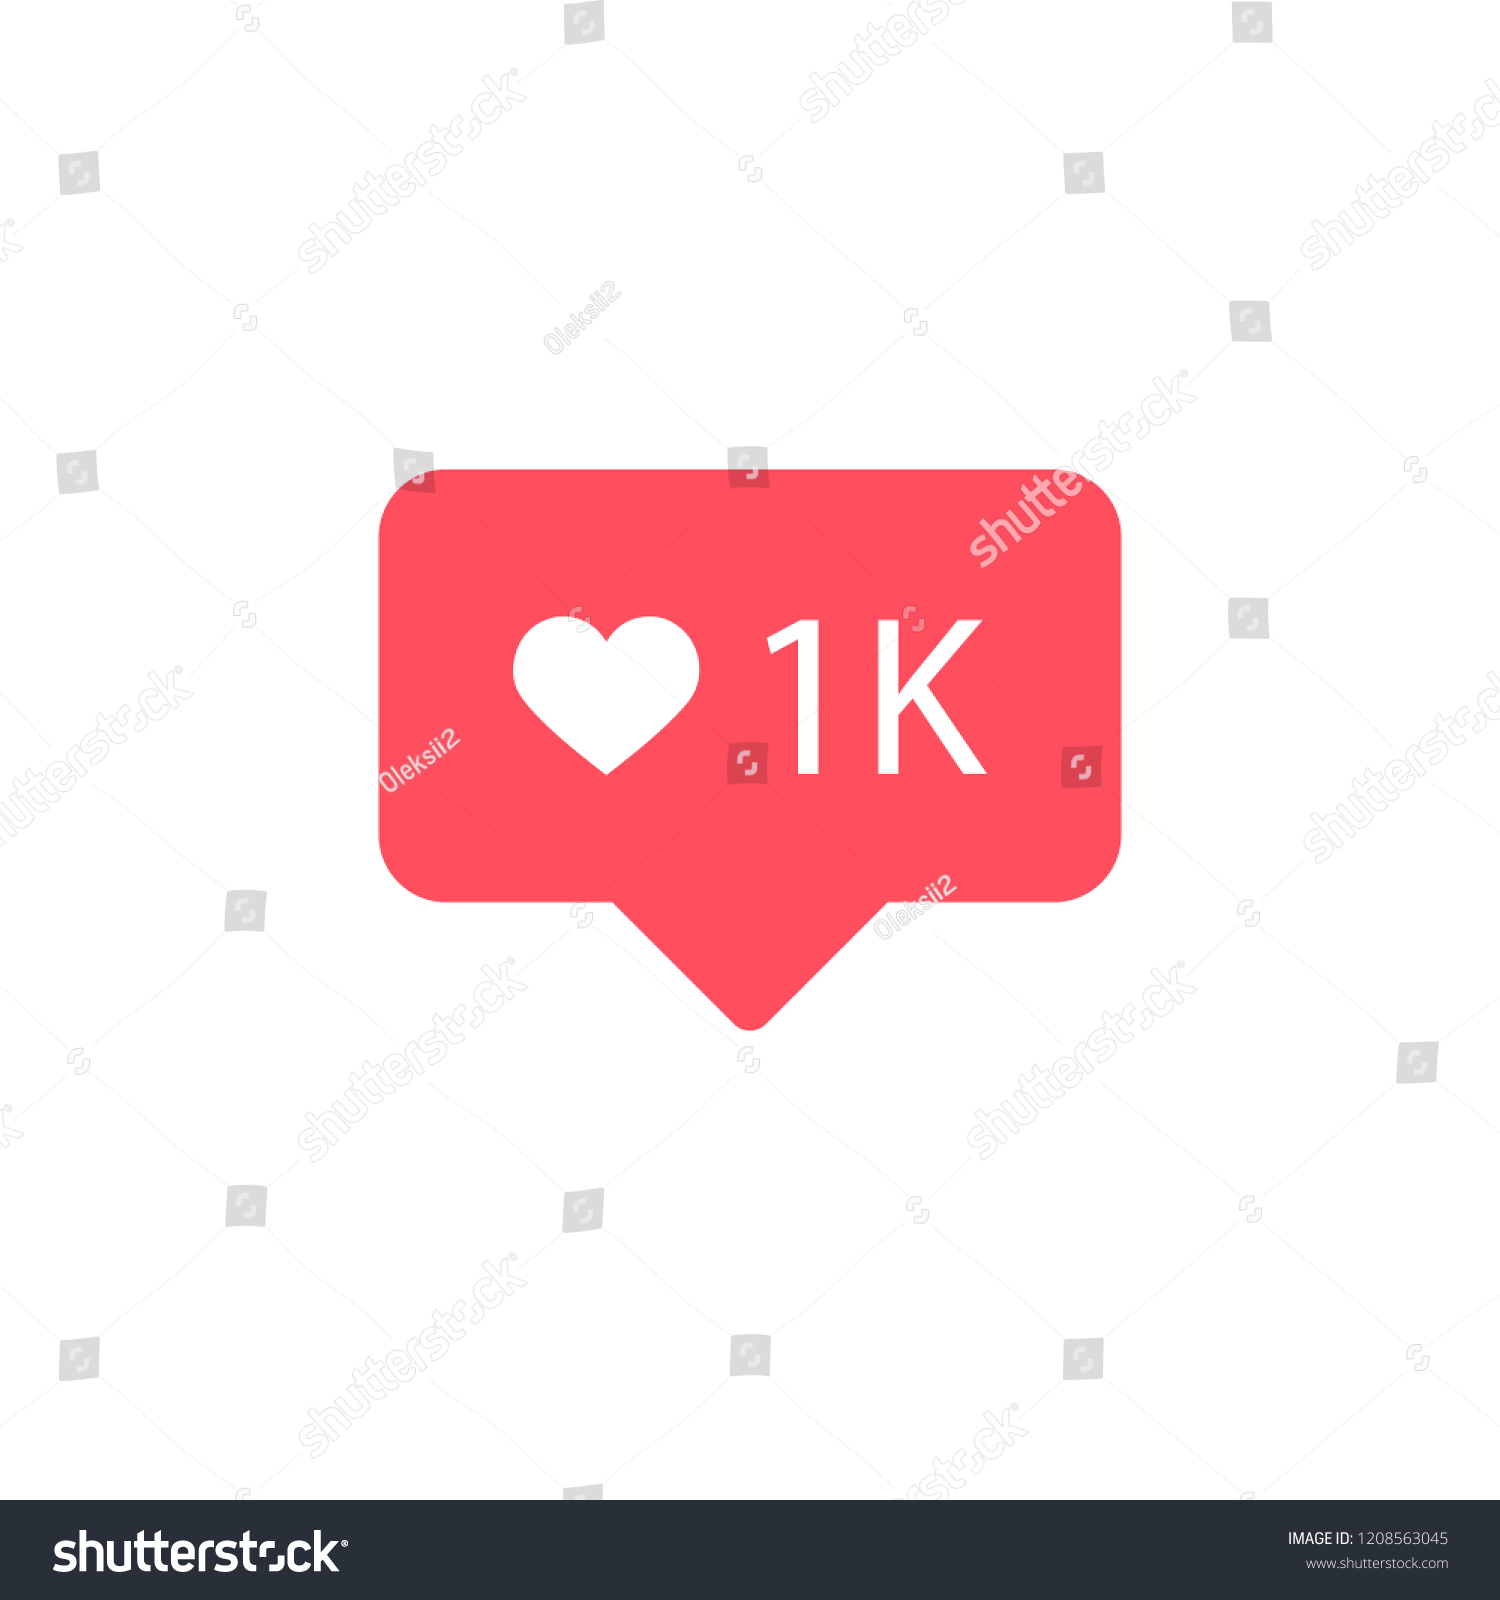 SVG of Instagram. Heart shape. Like icon. Social media. Vector illustration.
 svg